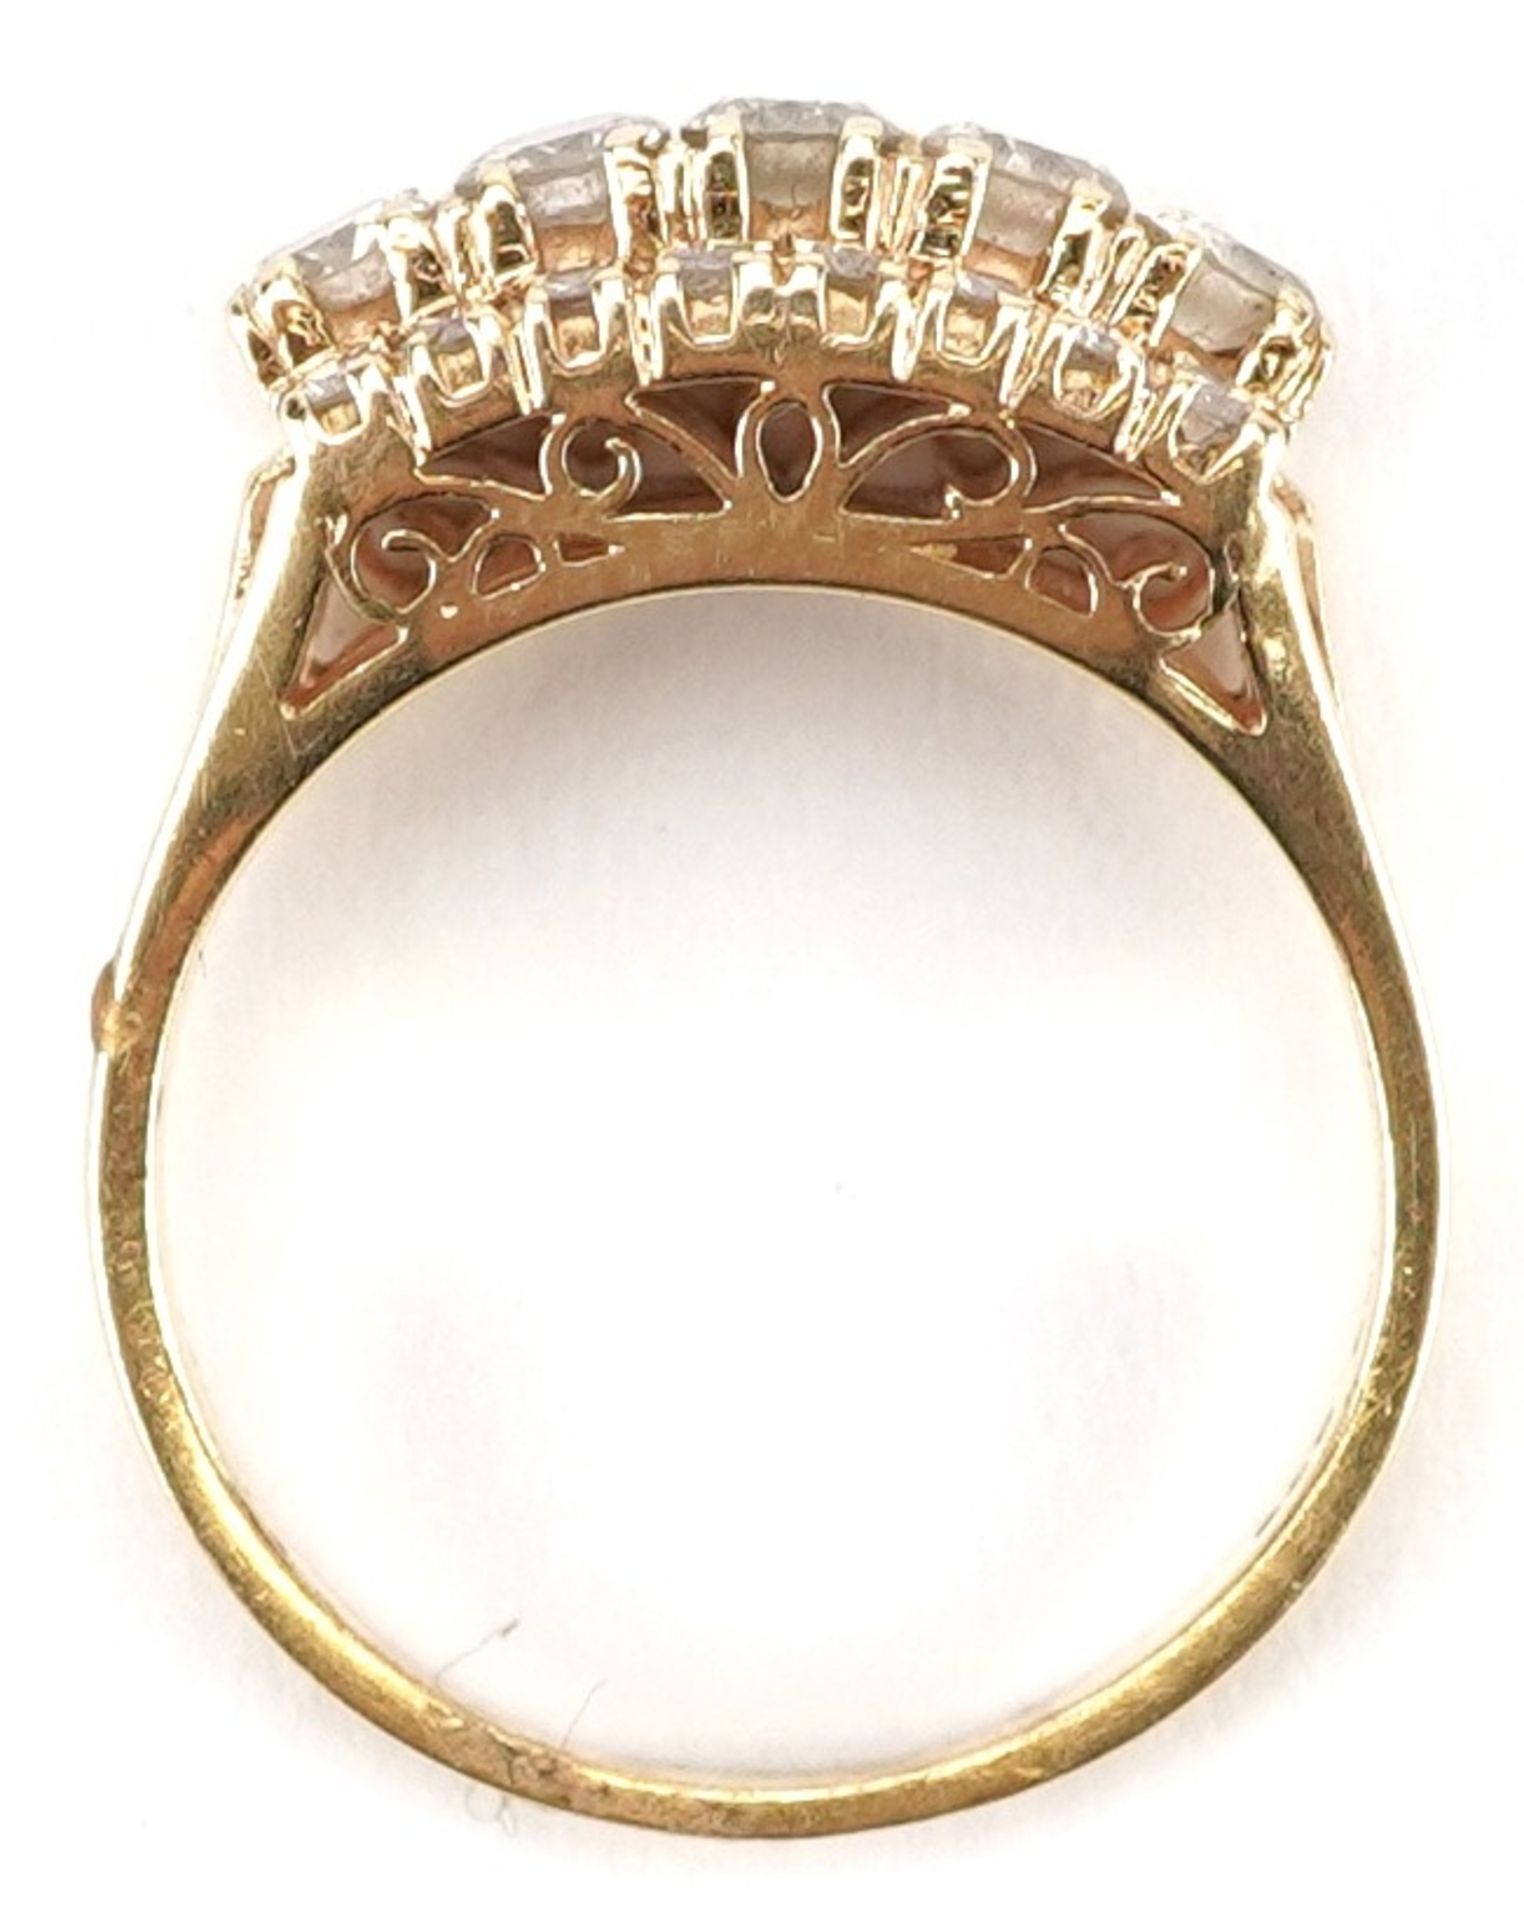 14k gold diamond three row cluster ring, total diamond weight approximately 0.46 carat, size J, 3.4g - Bild 3 aus 5